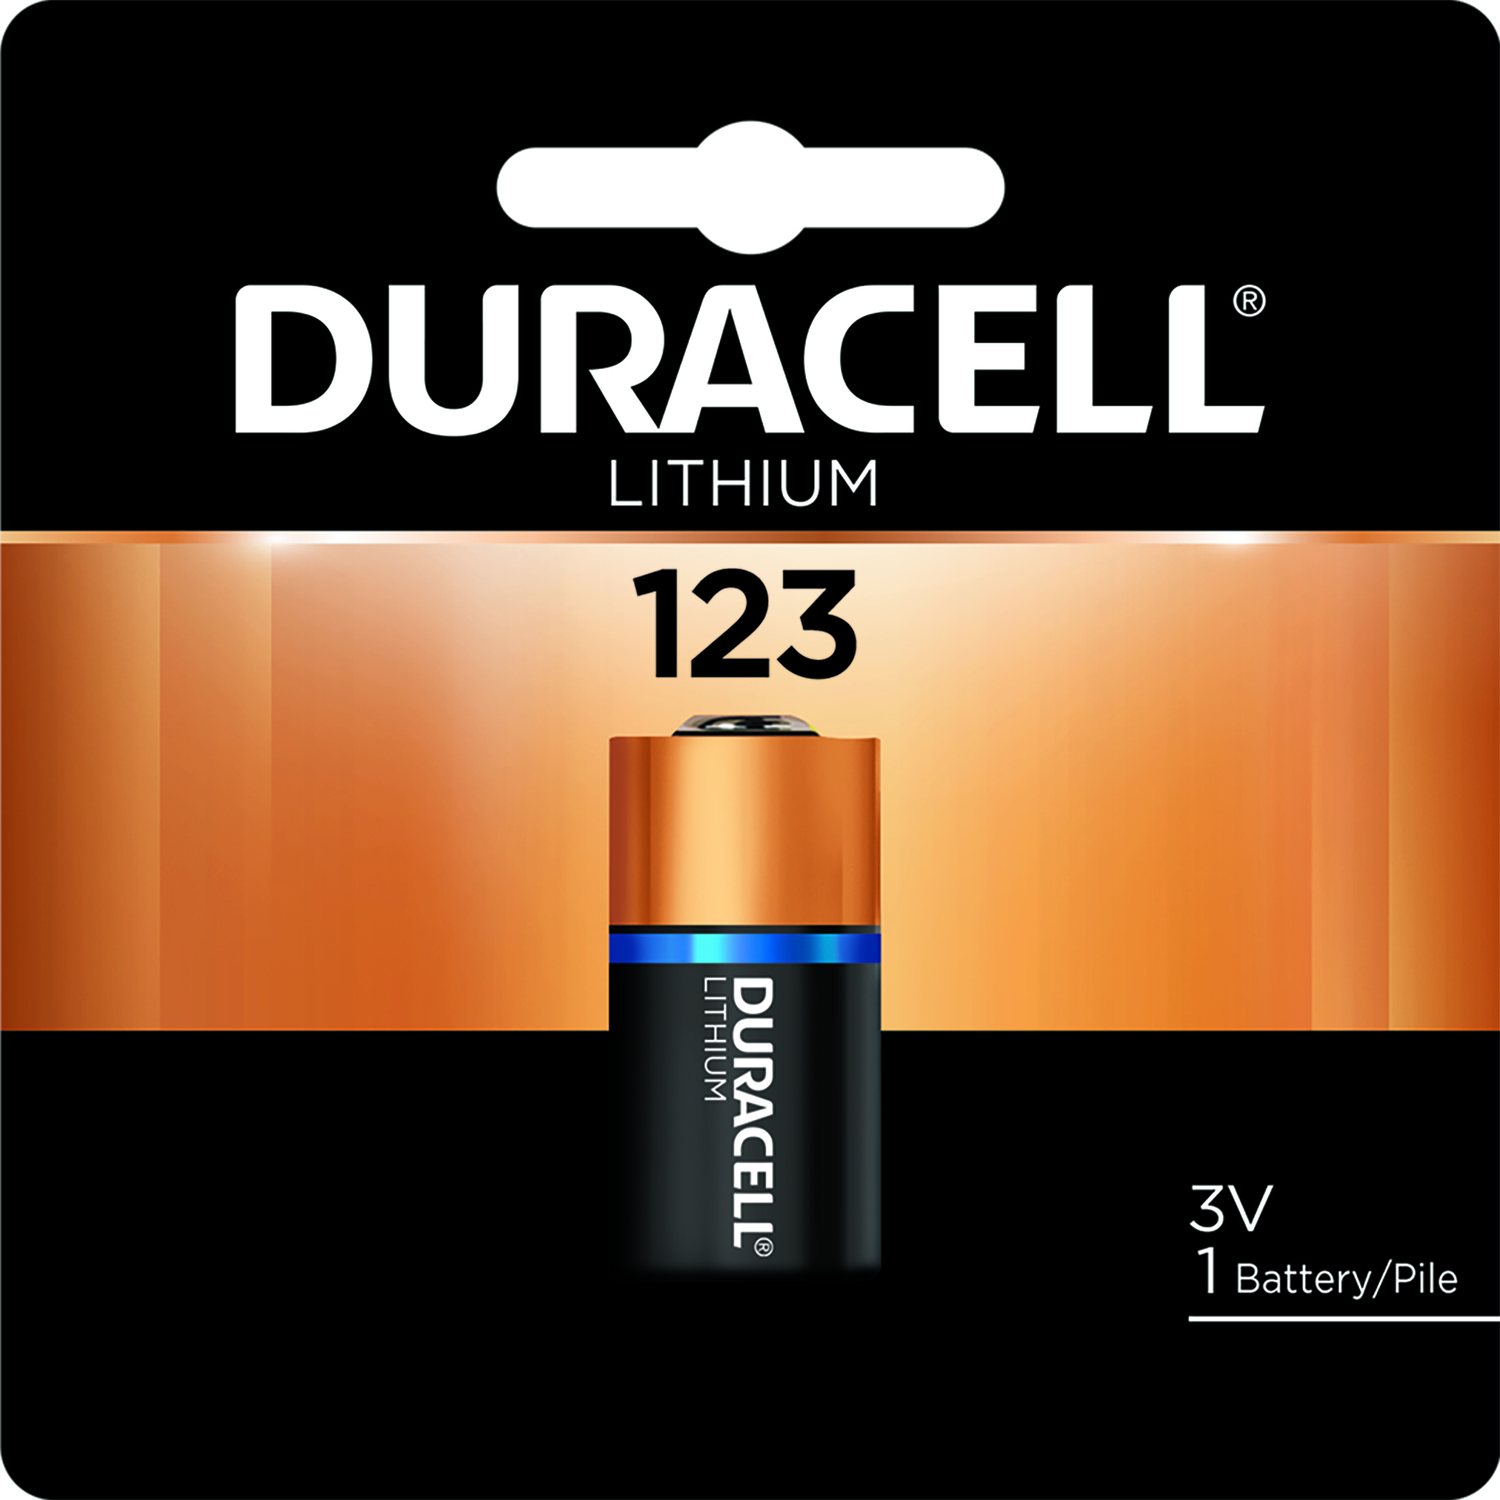 Duracell Lithium 123 3 V 1.4 Ah Camera Battery 1 pk